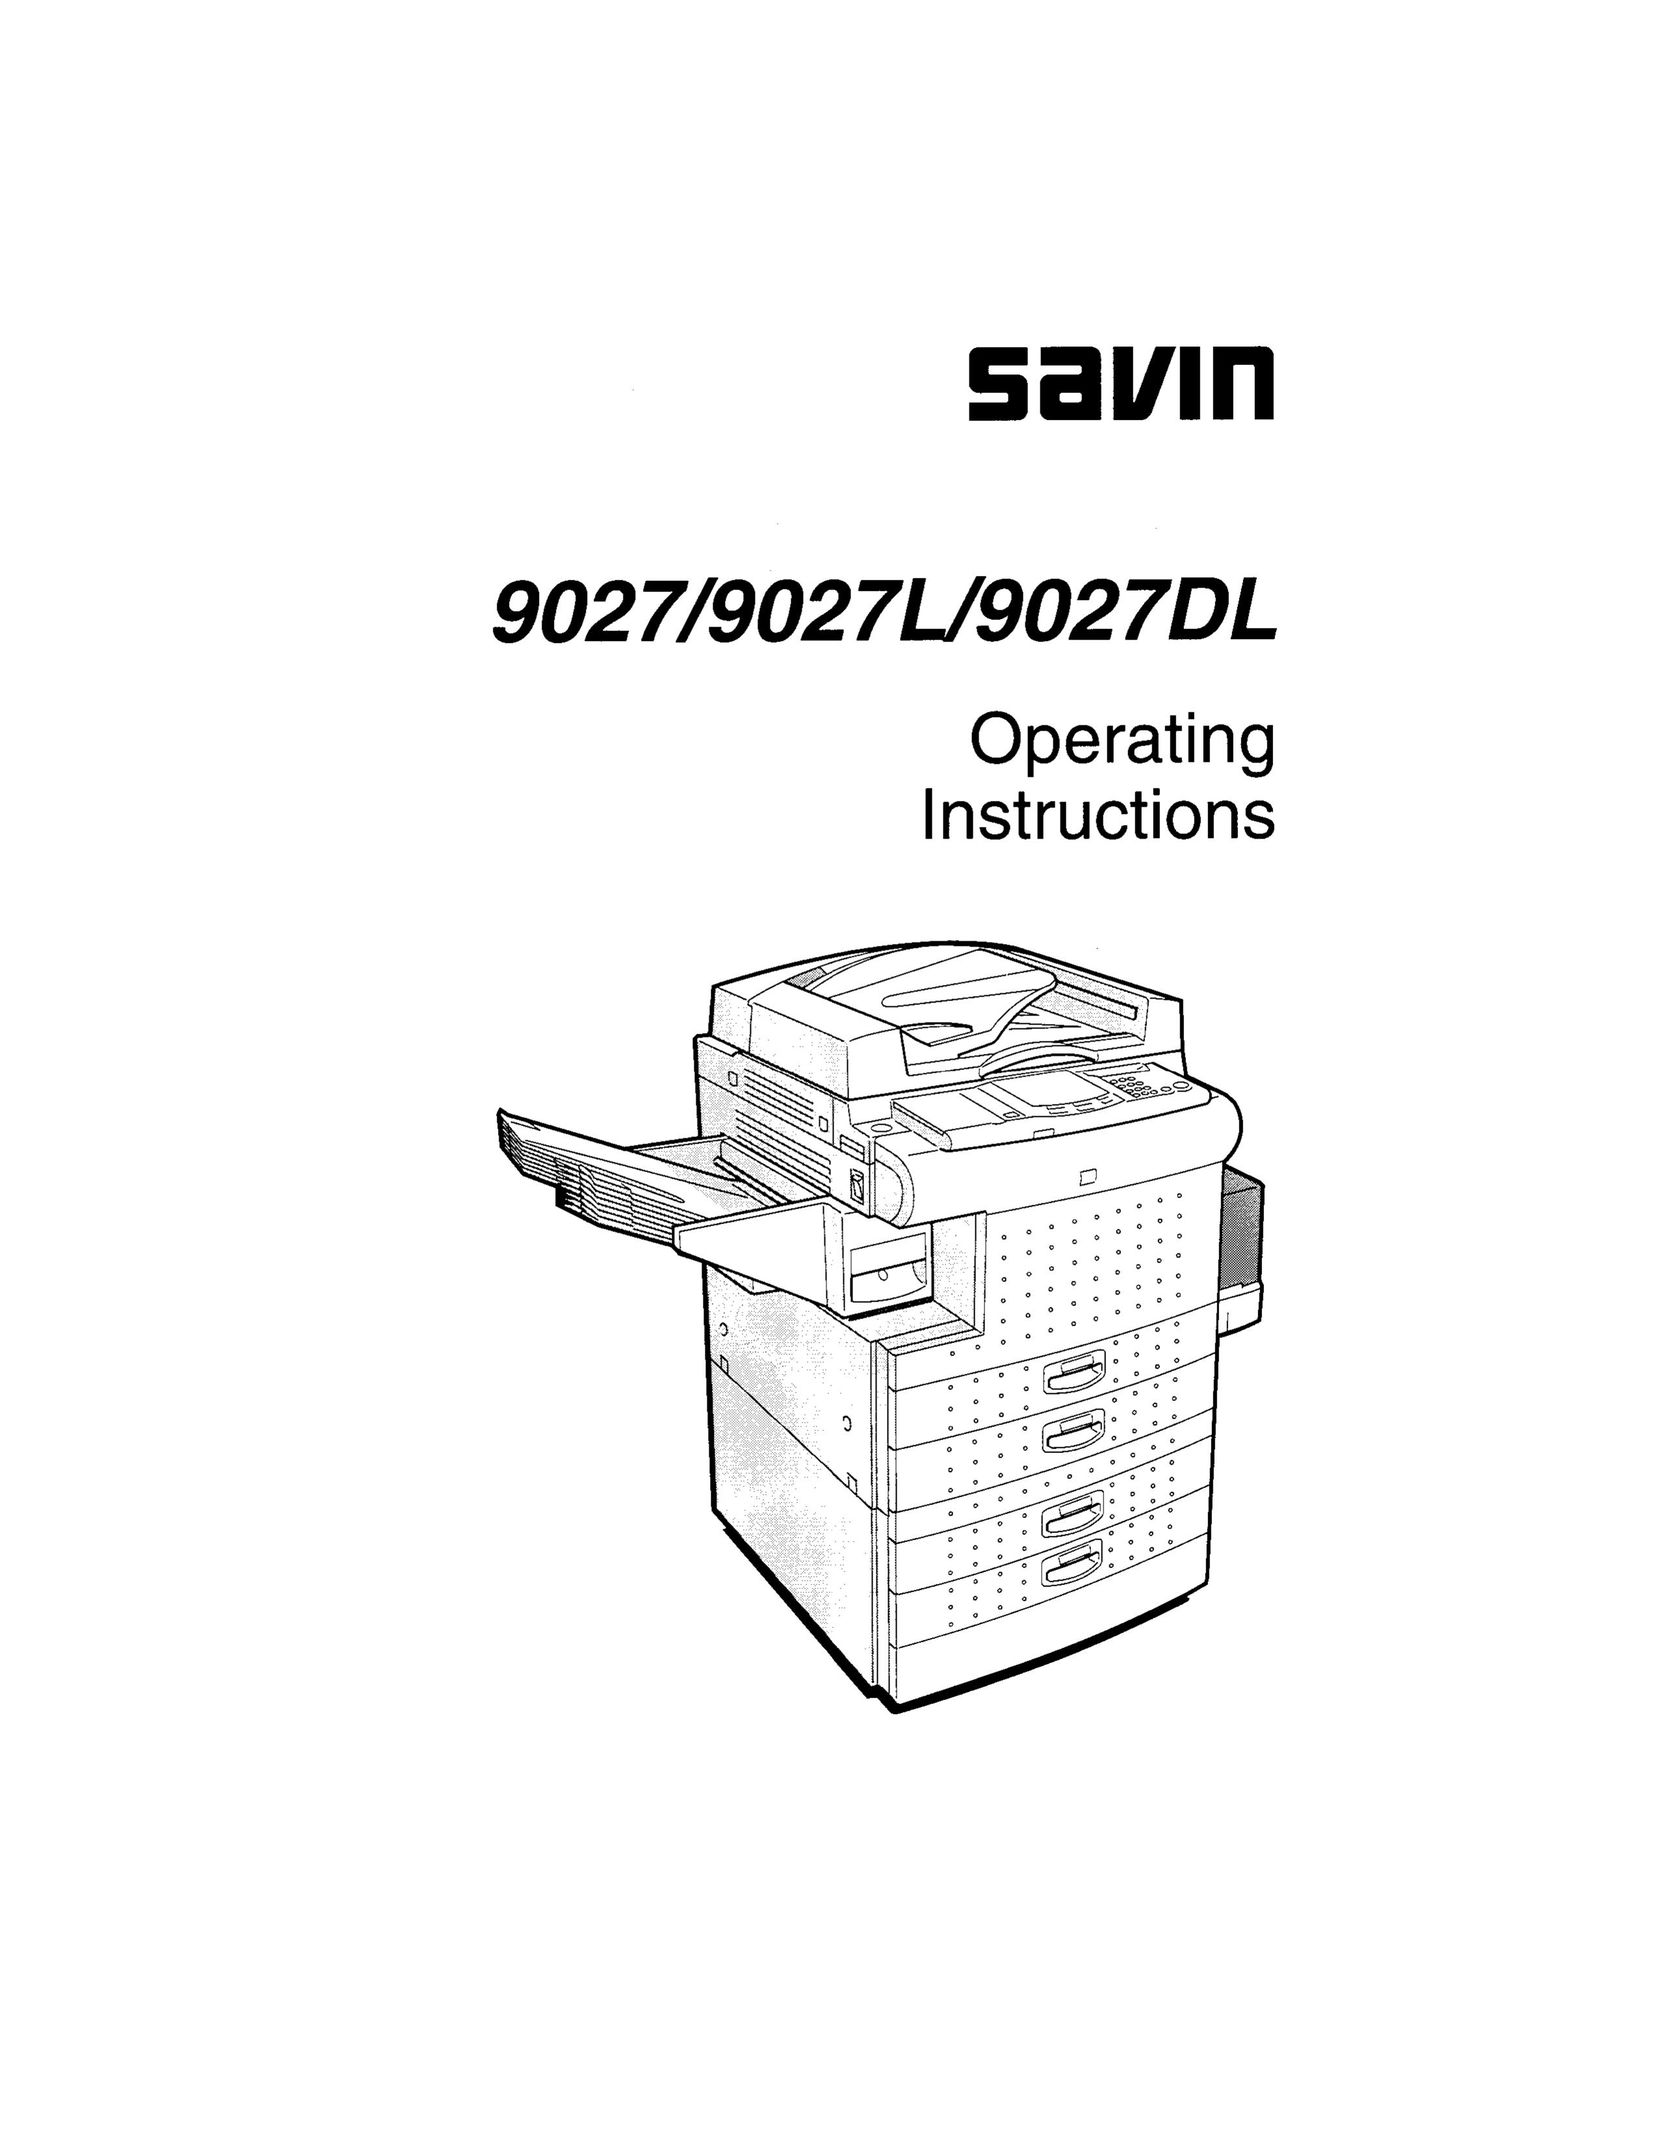 Savin 9027DL All in One Printer User Manual